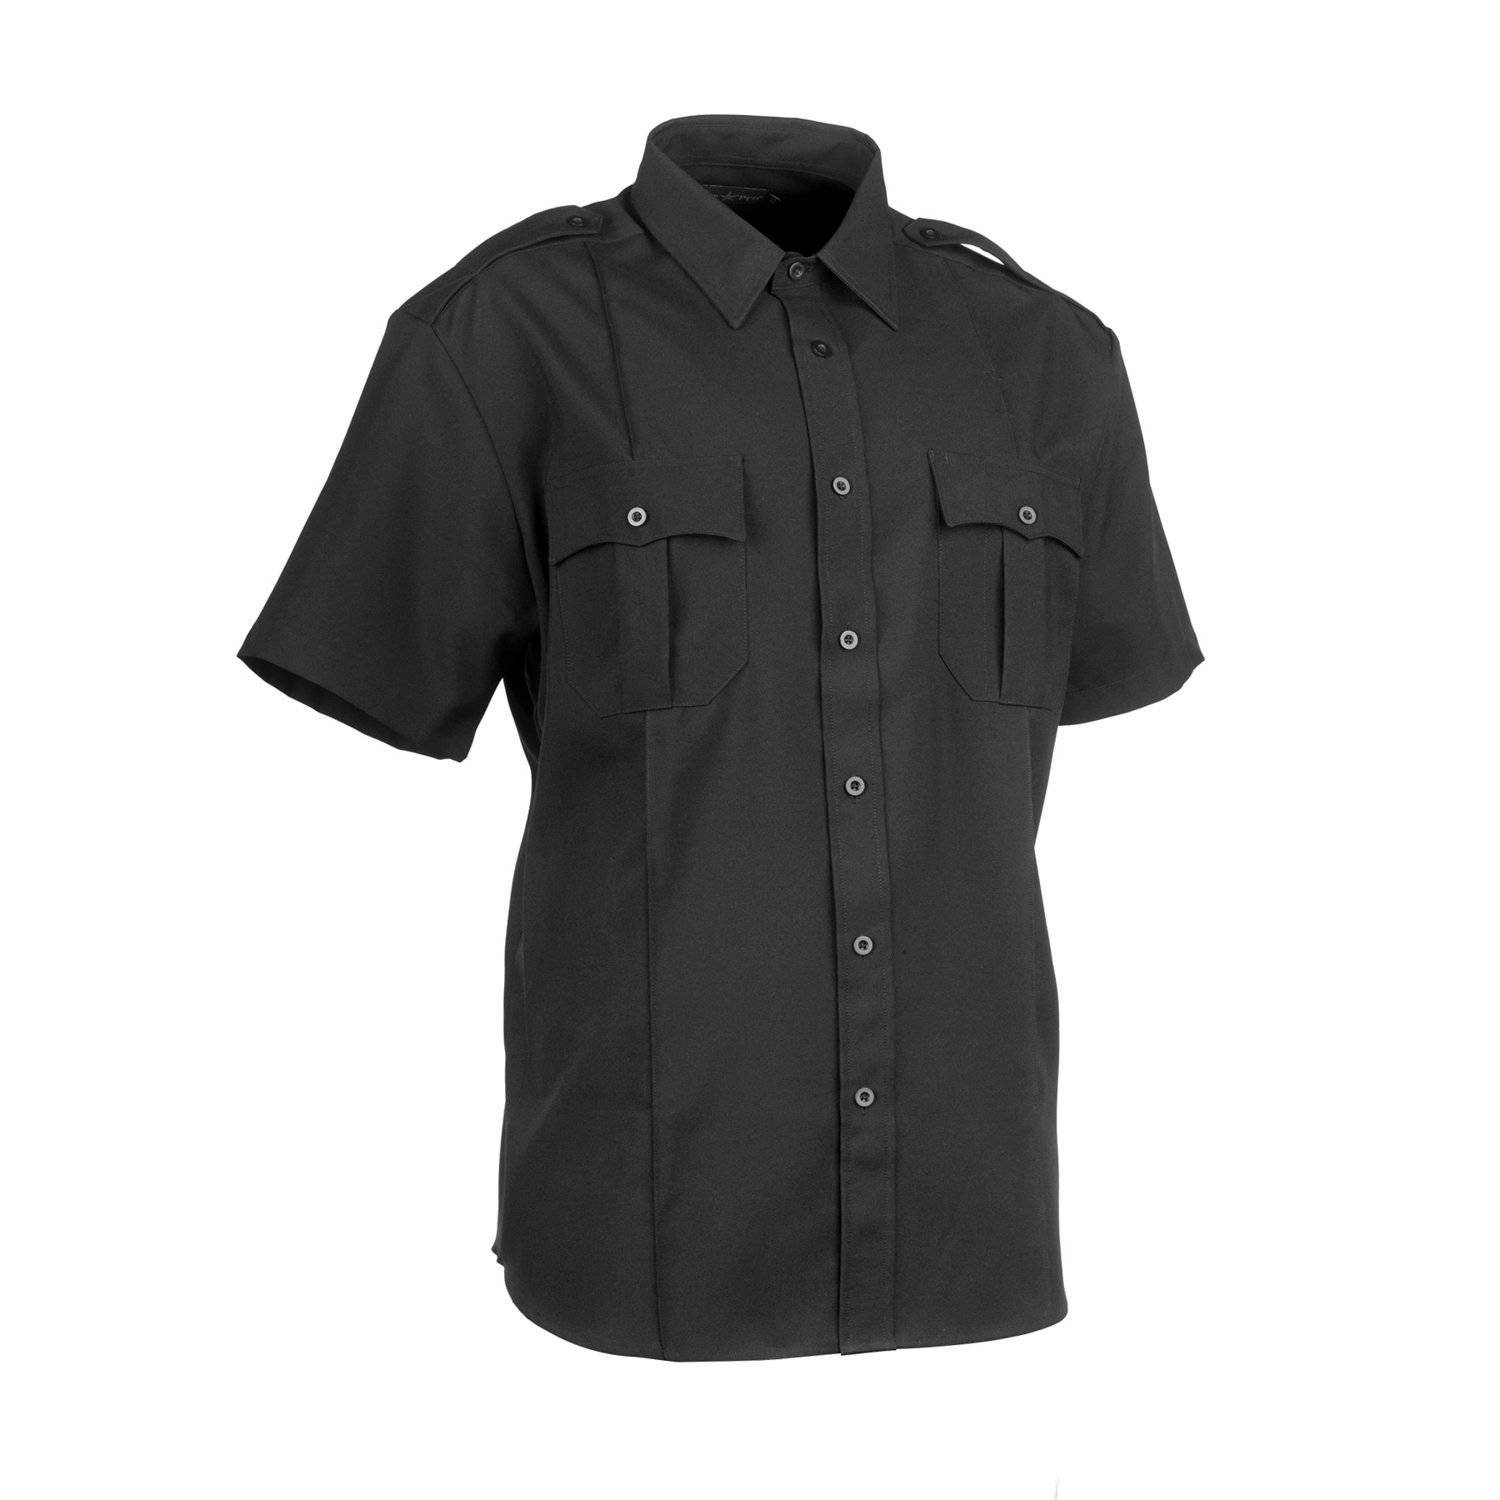 Uniform Short Sleeve Shirt Men's Official Duty Police Security 2-Pocket Epaulets 